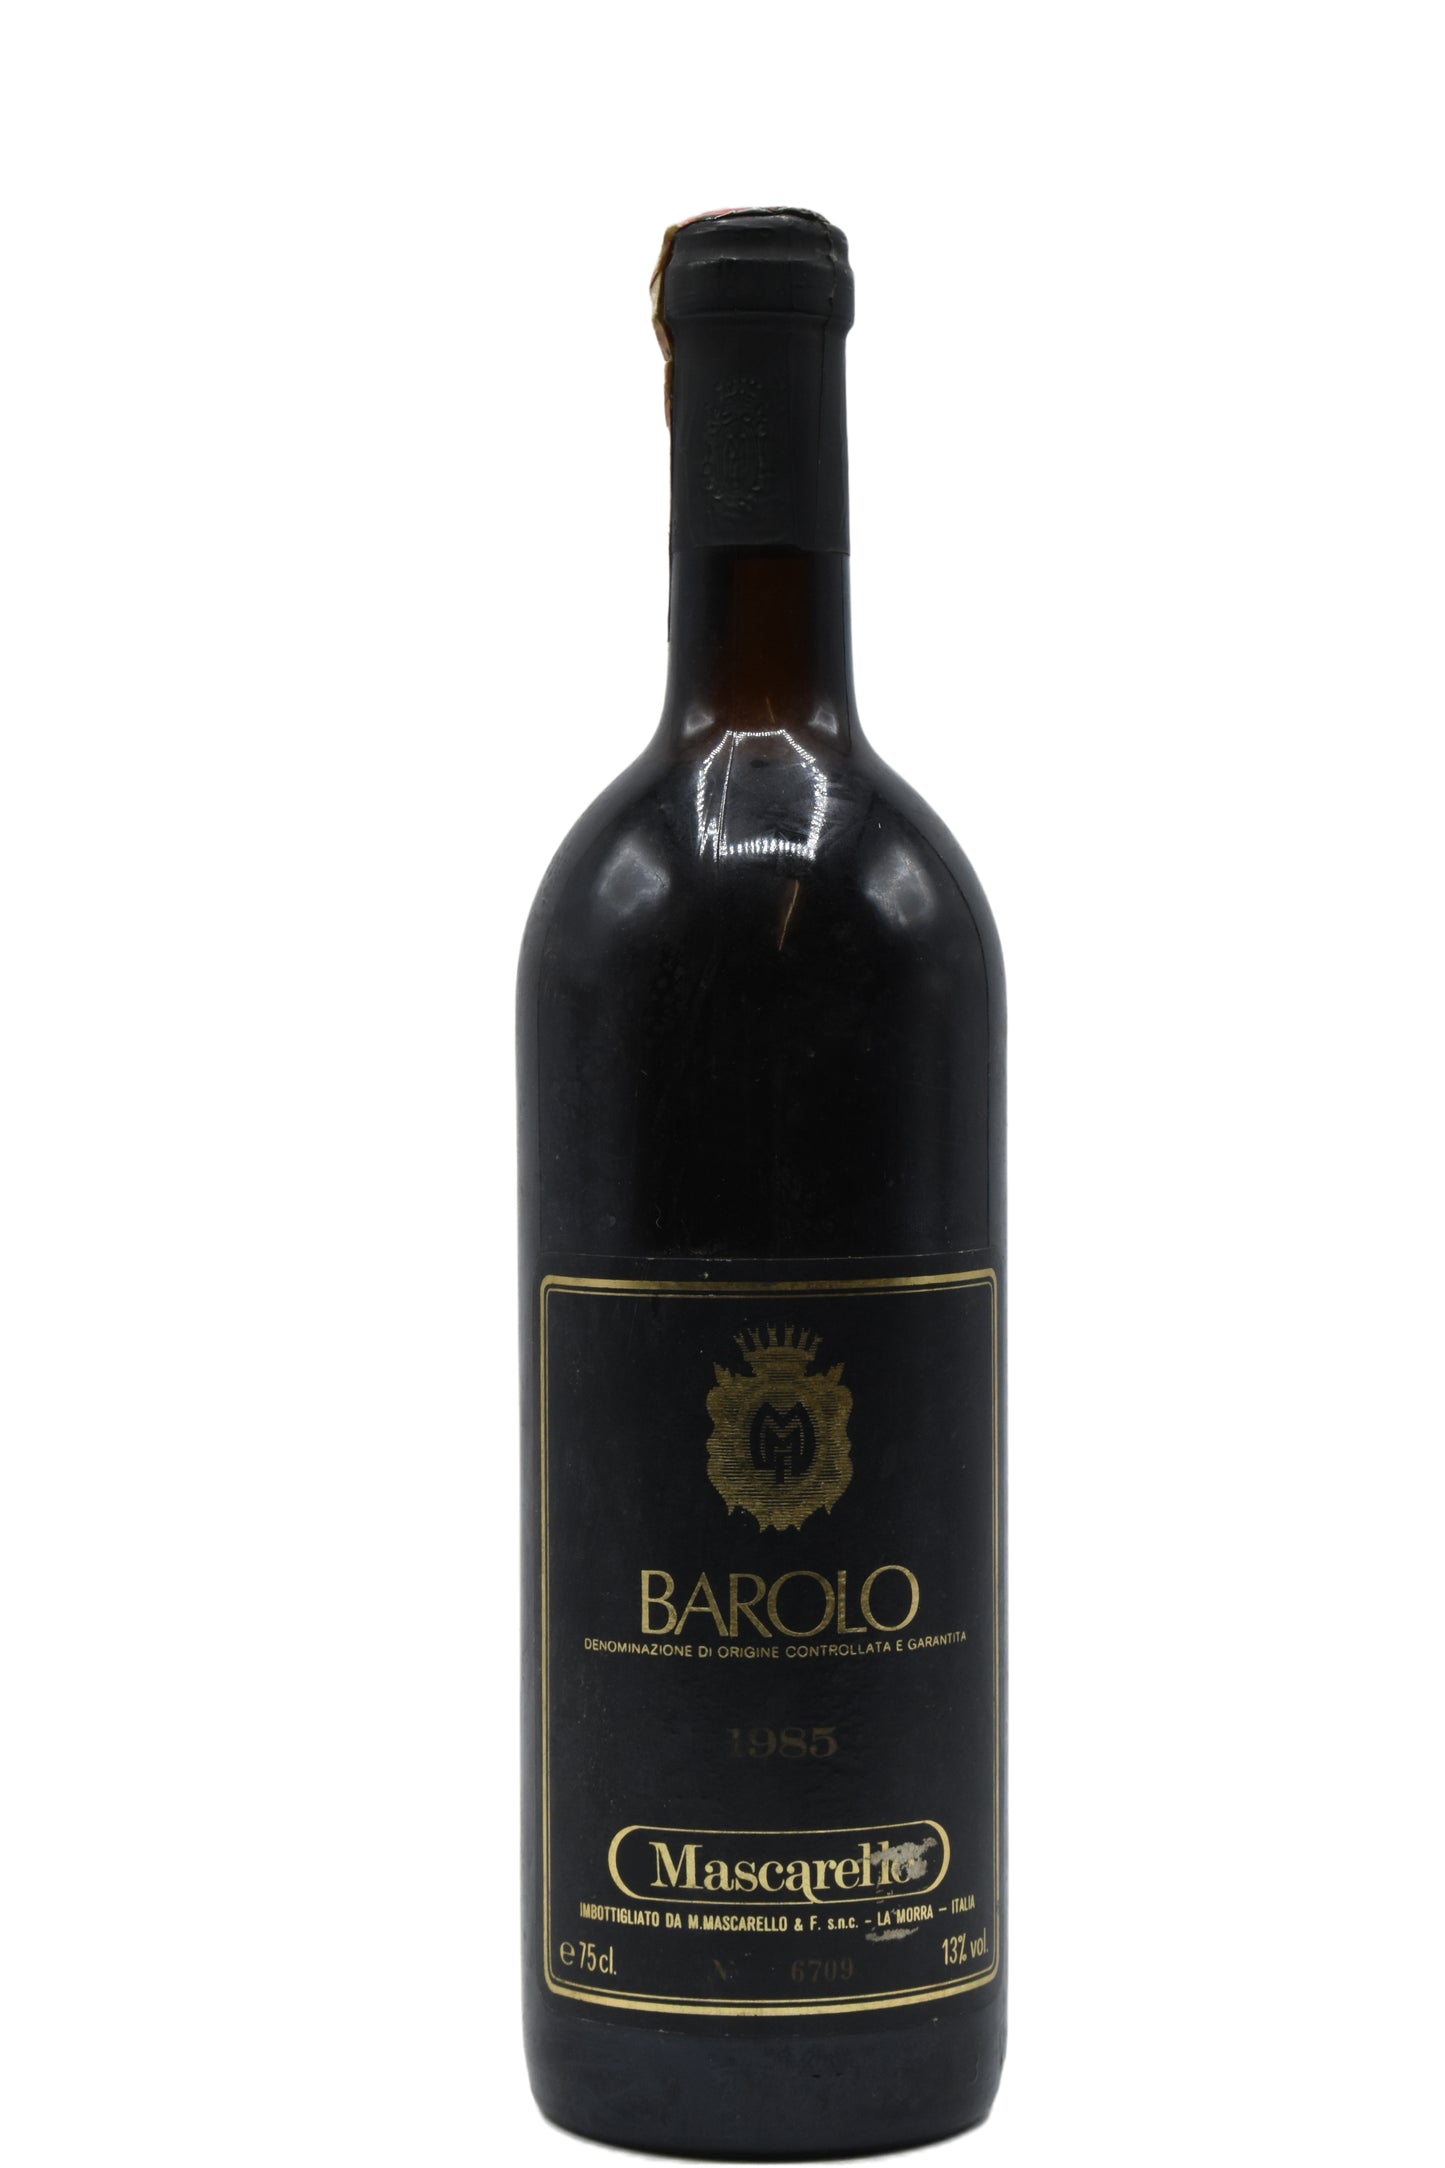 1985 Mascarello (Michele) Barolo 750ml - Walker Wine Co.